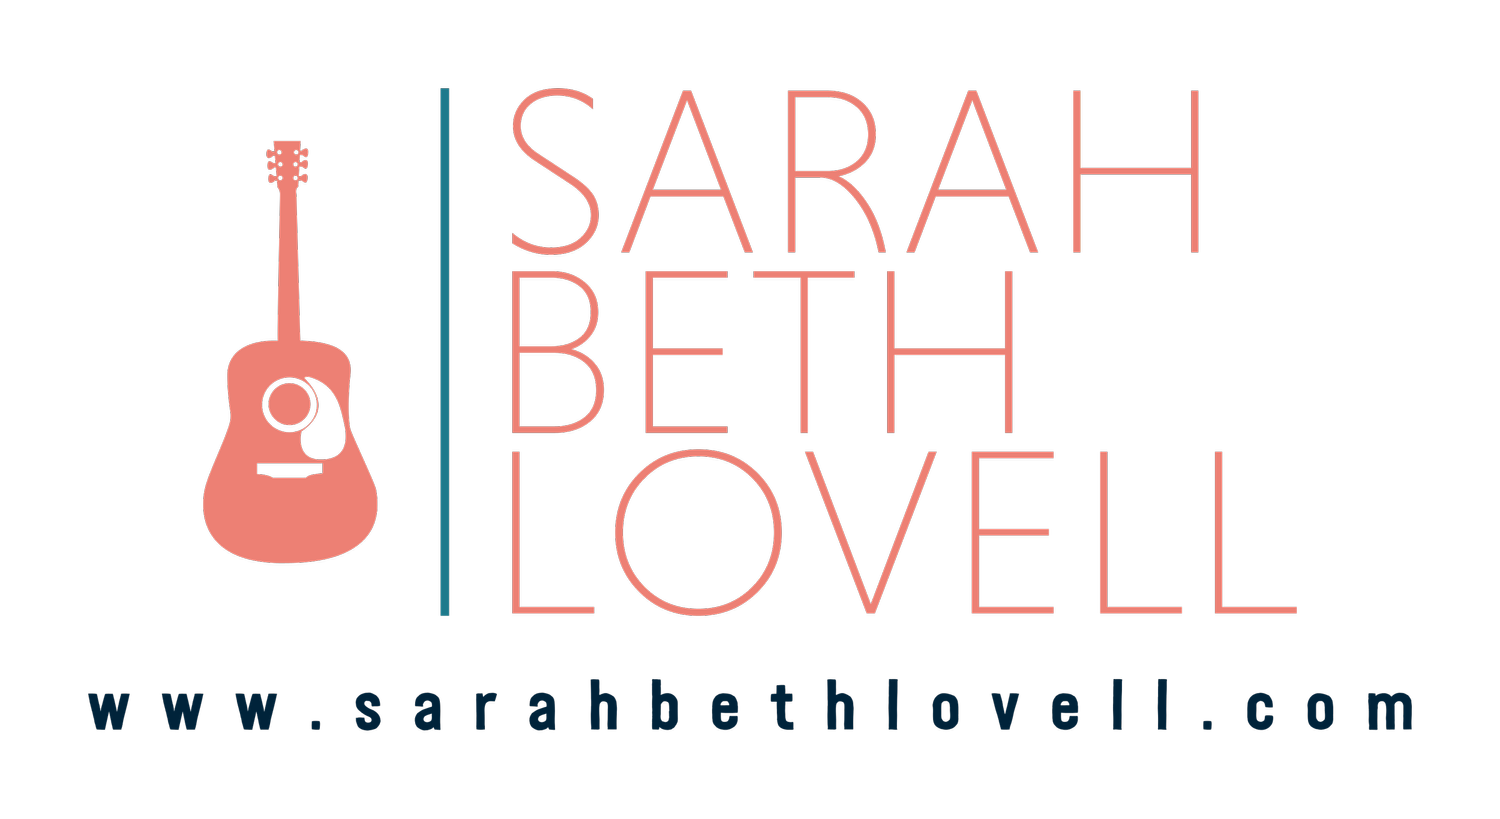 Sarah Beth Lovell